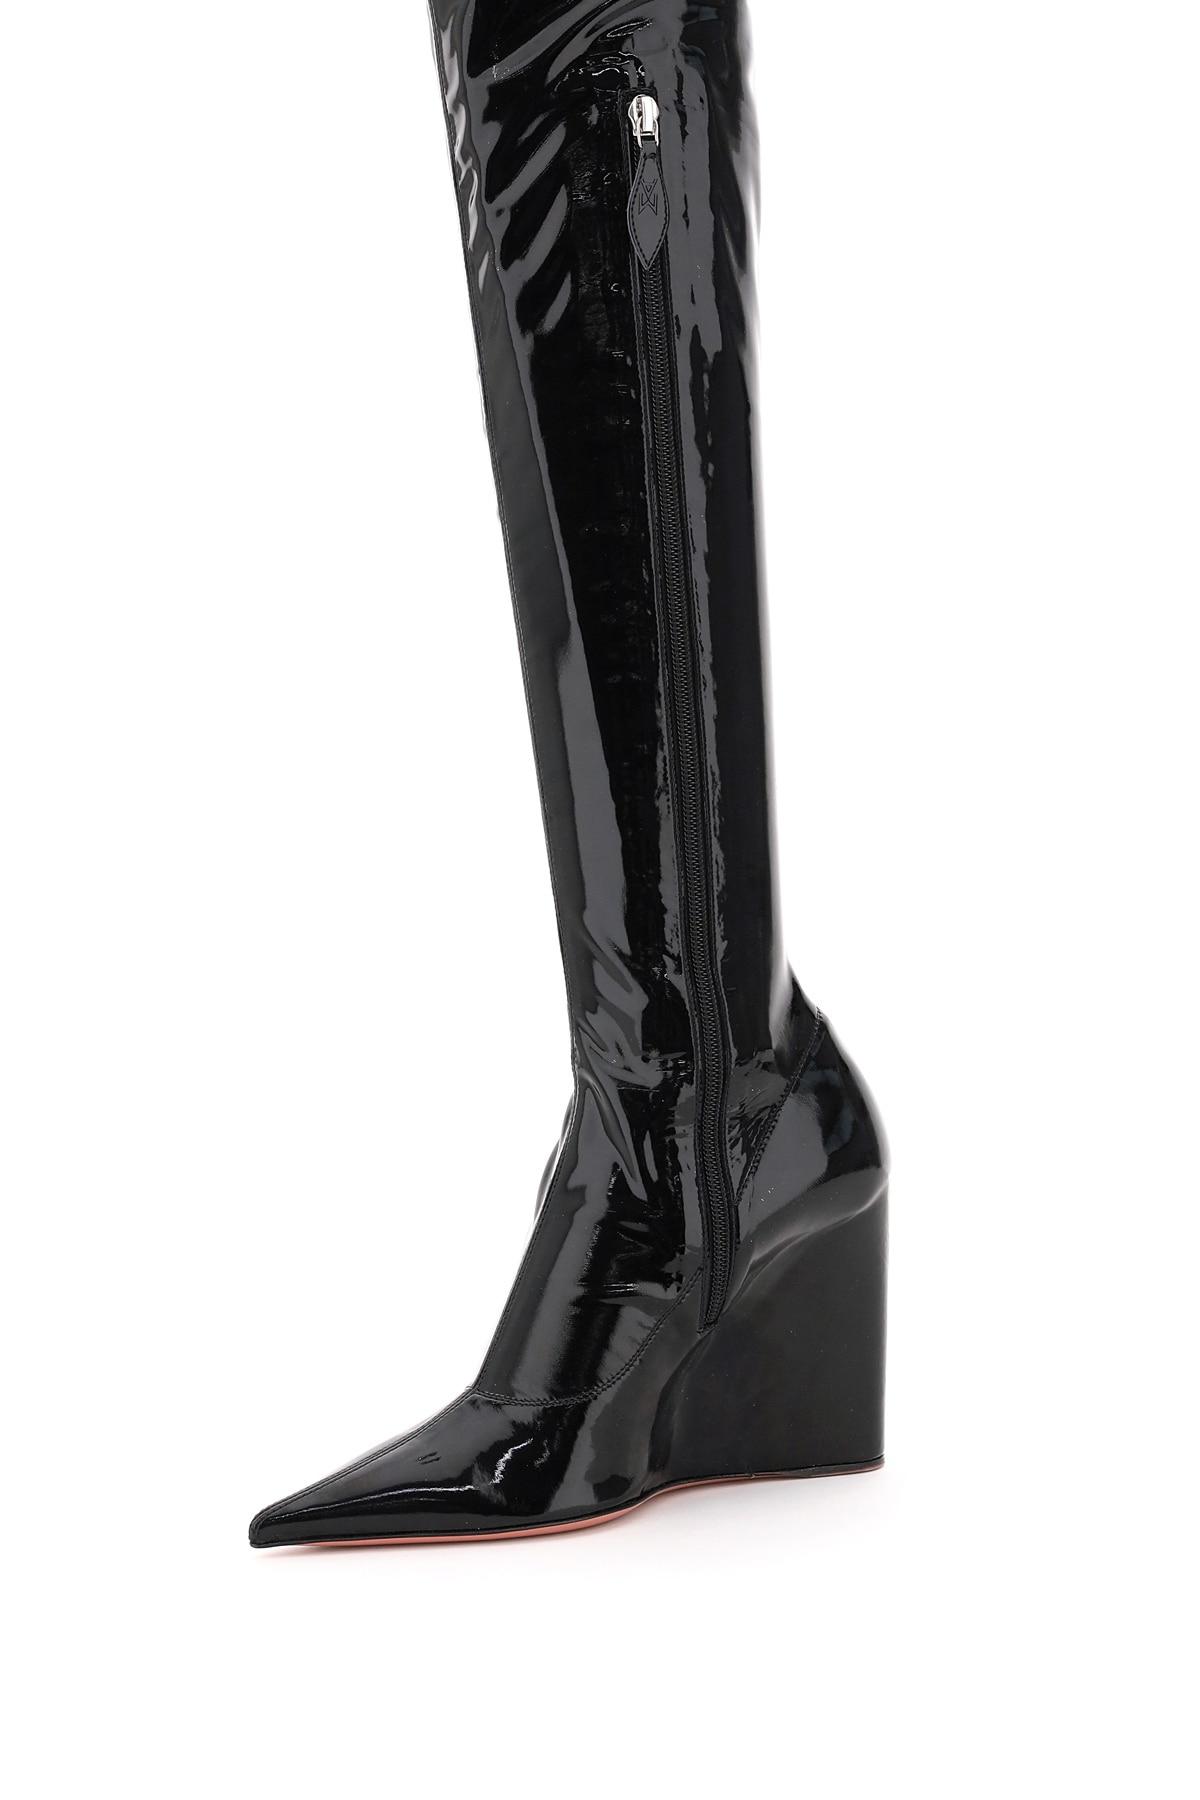 AMINA MUADDI Danielle Thigh High Latex Boots in Black | Lyst